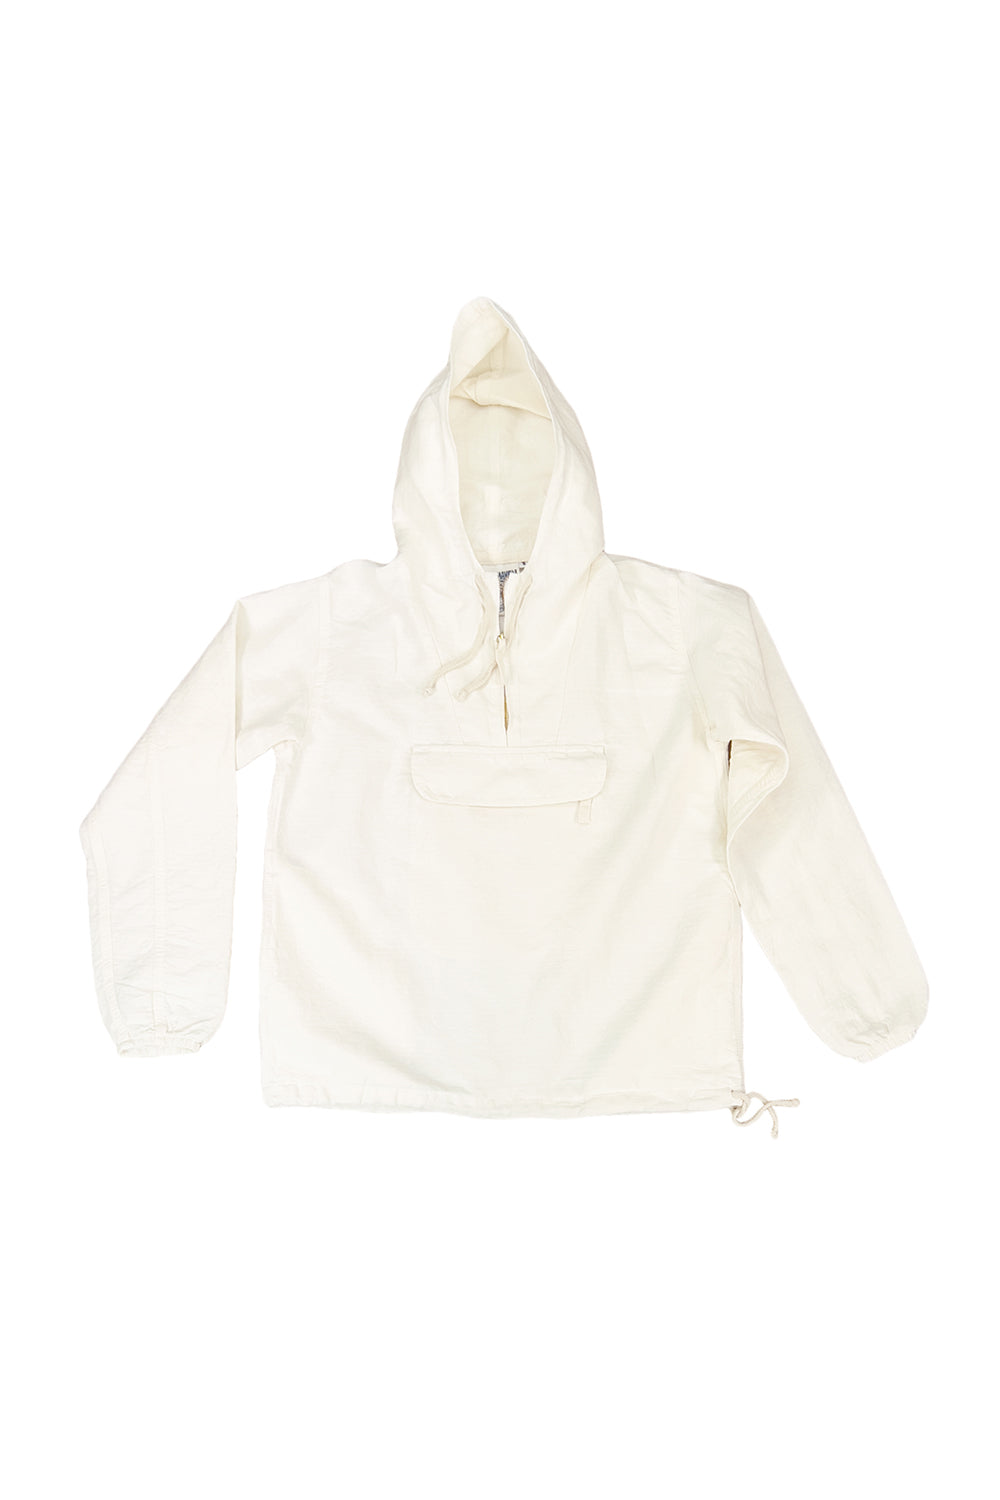 Shoreline Anorak Jacket | Jungmaven Hemp Clothing & Accessories / Color: Washed White